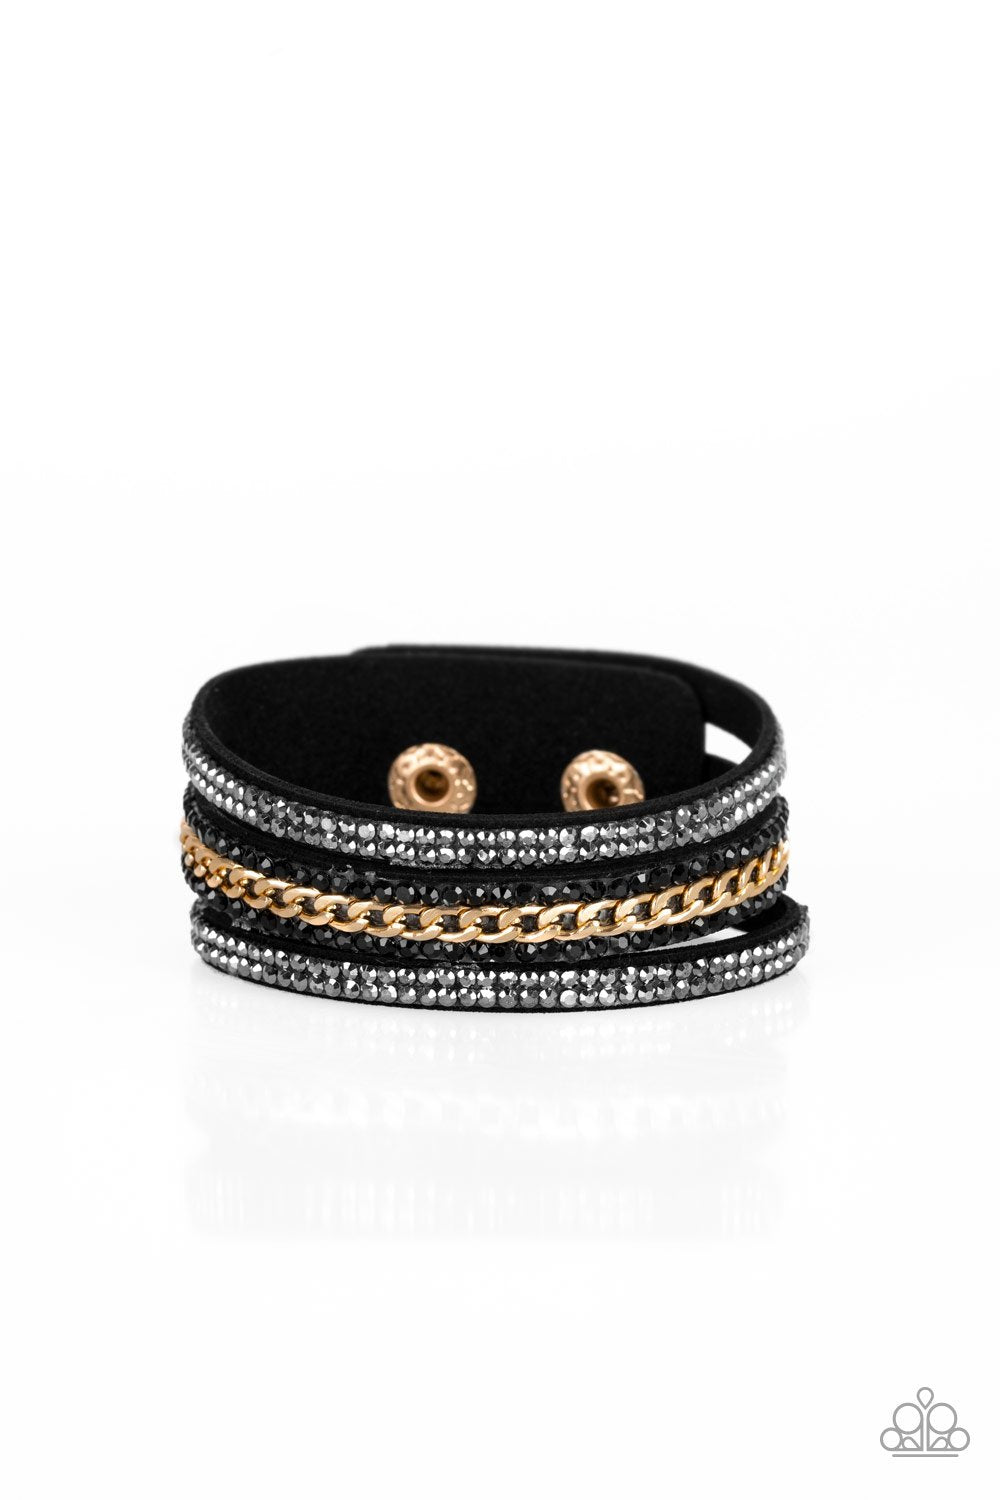 Paparazzi Rollin\' In Rhinestones Black & Gold Wrap Bracelet | Bettelarmbänder